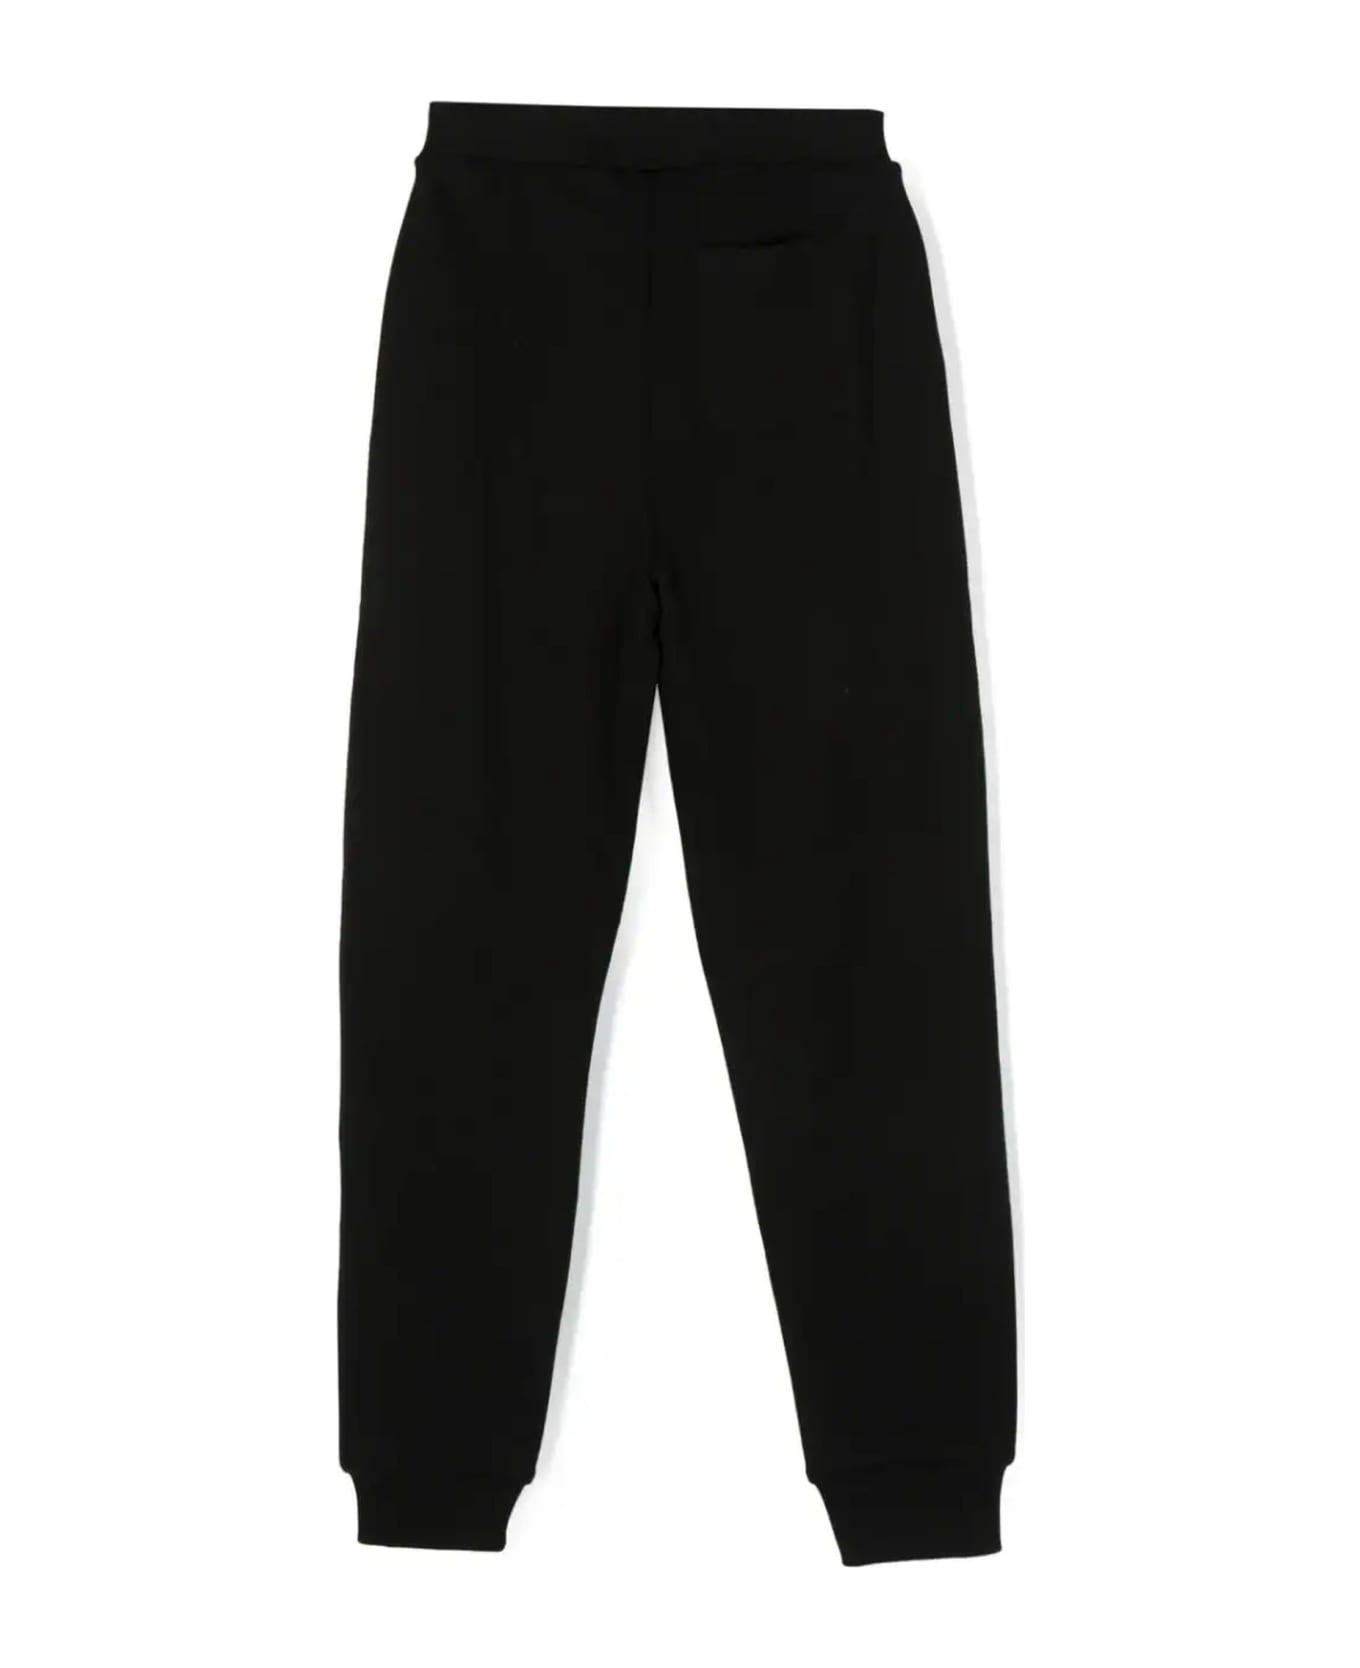 Balmain Trousers Black - Black ボトムス